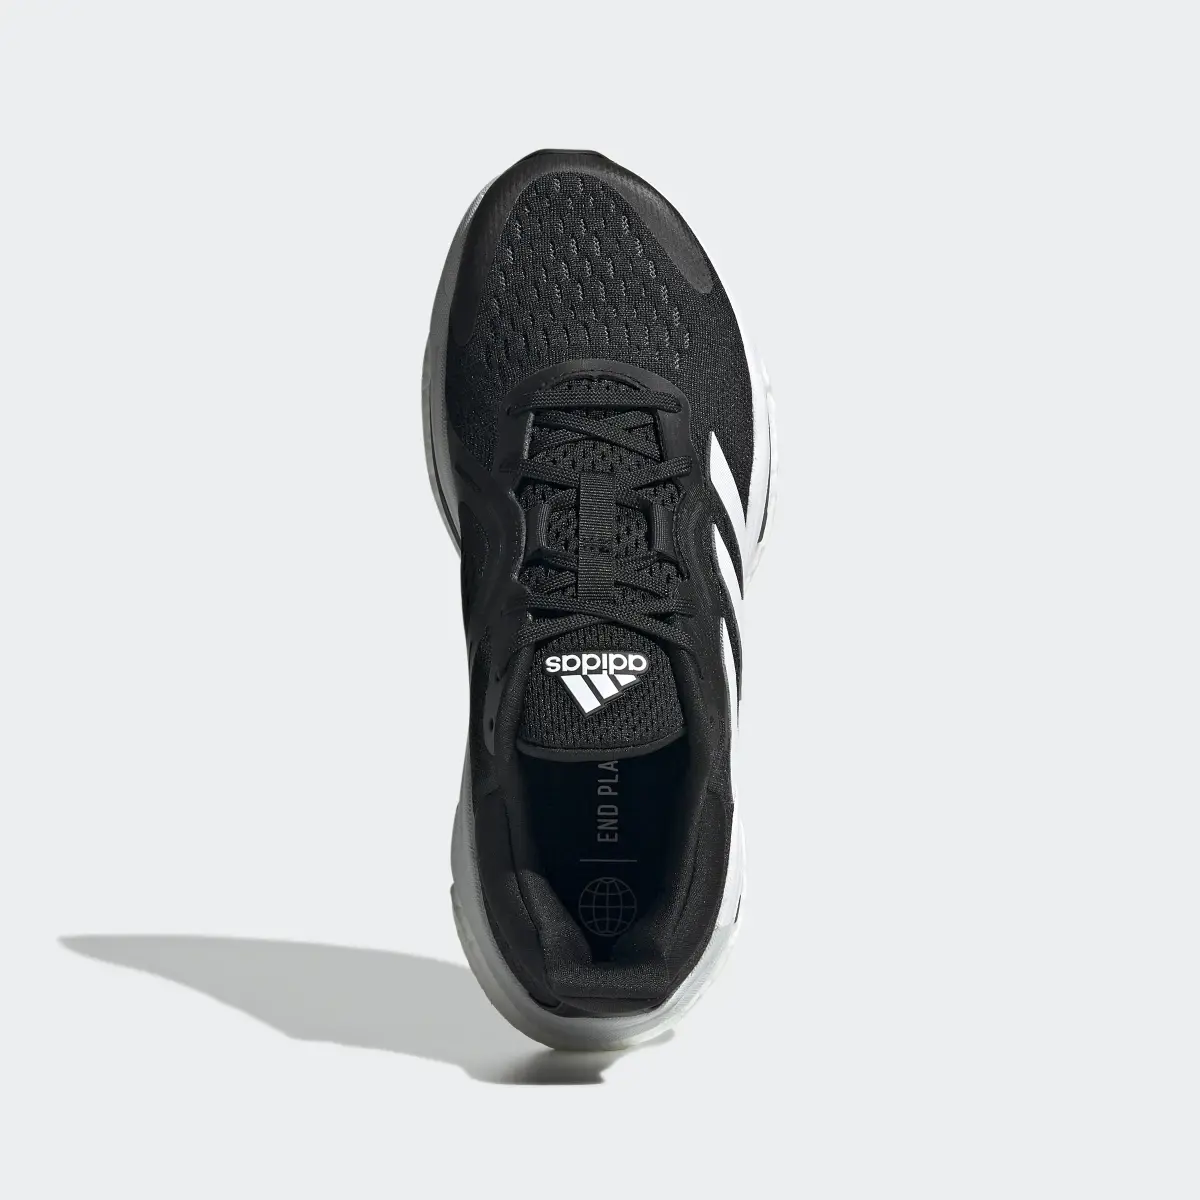 Adidas Solarcontrol Shoes. 3